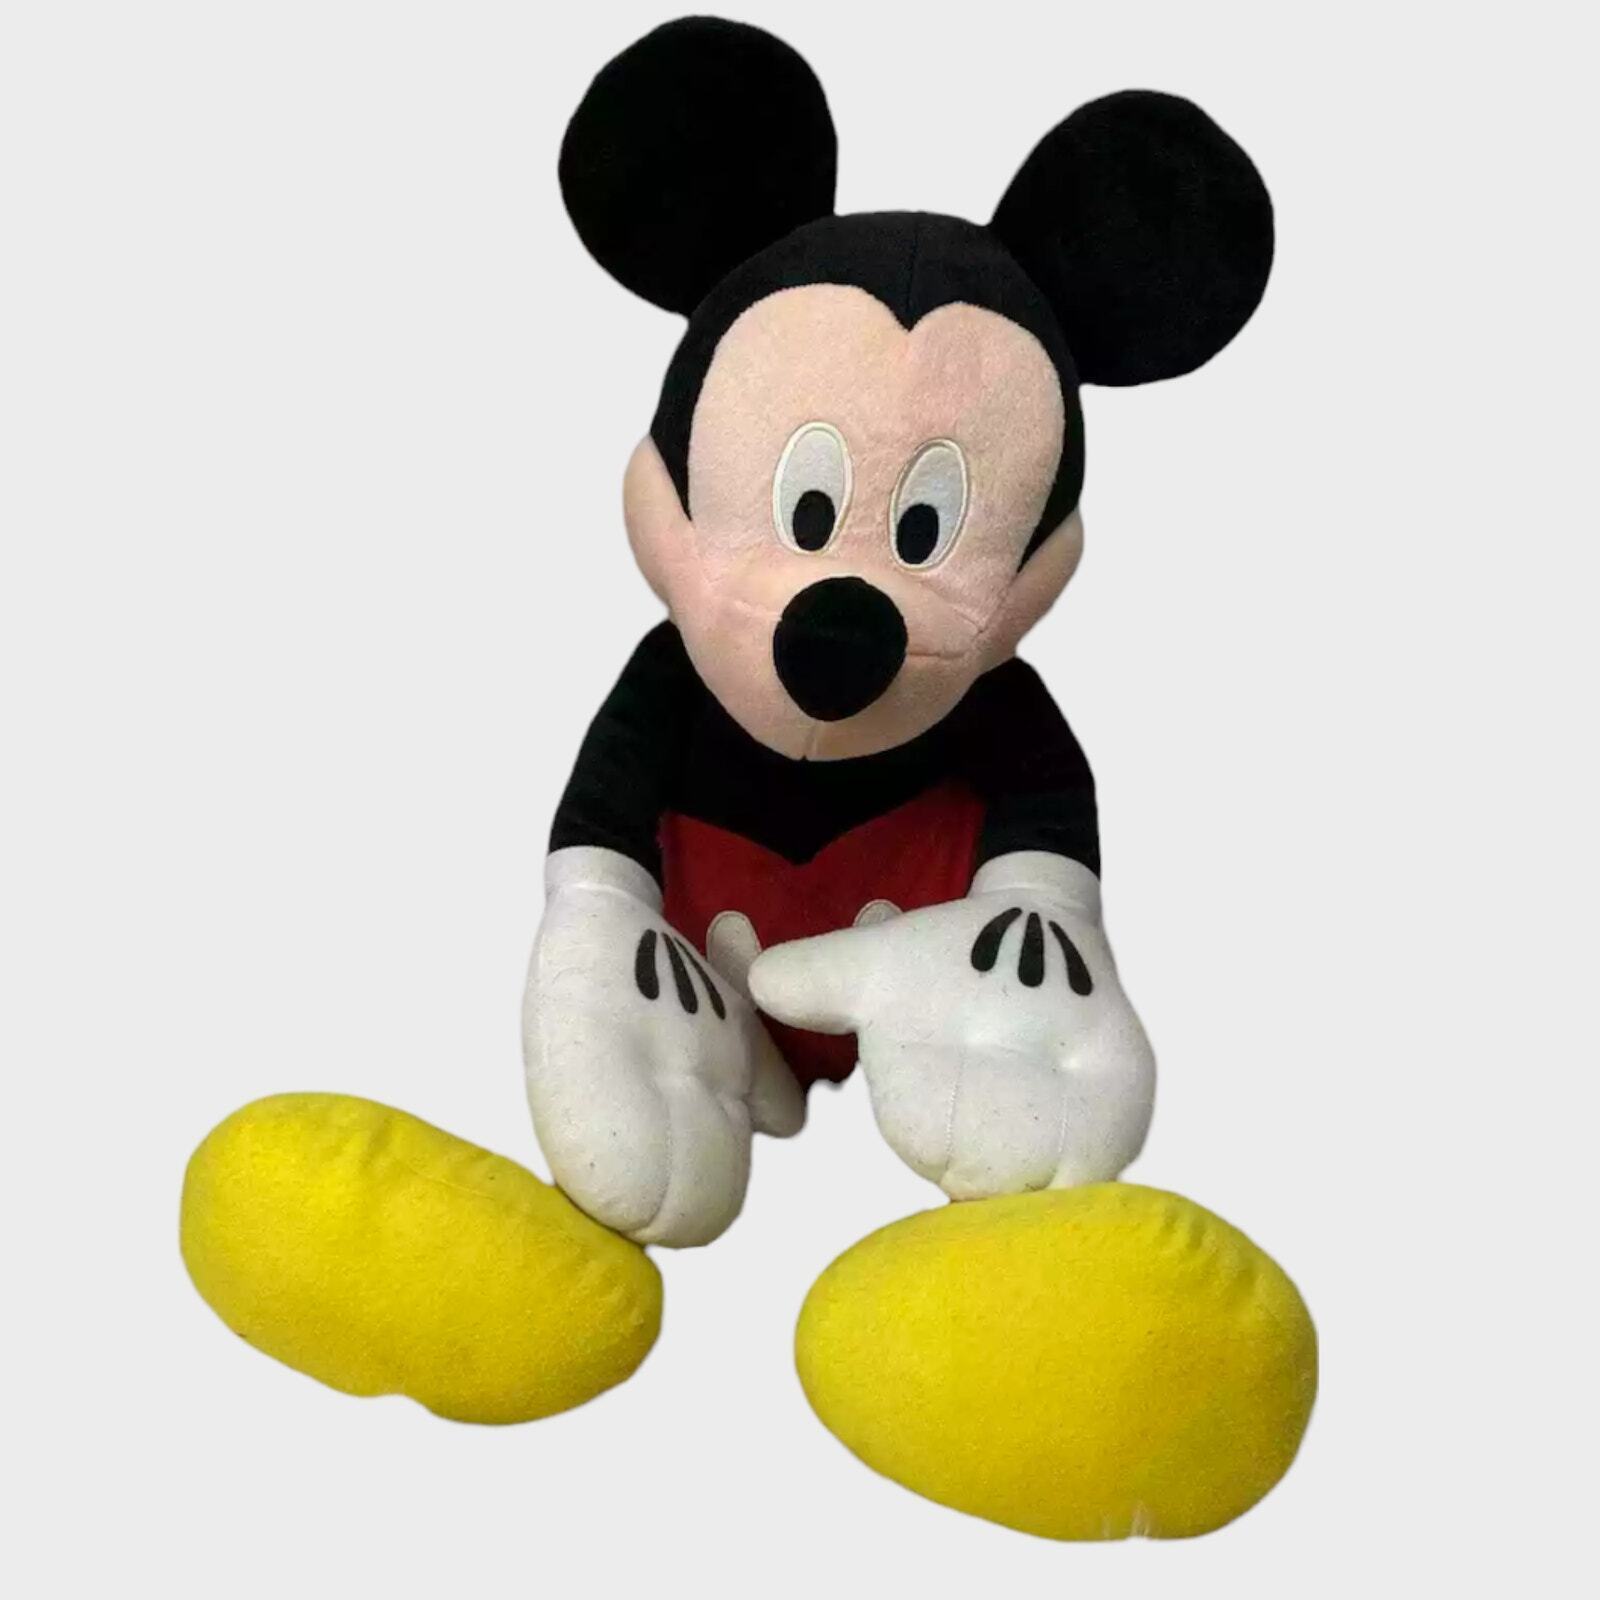 Disney Large 26” Inch Mickey Mouse Stuffed Animal Plush Toy